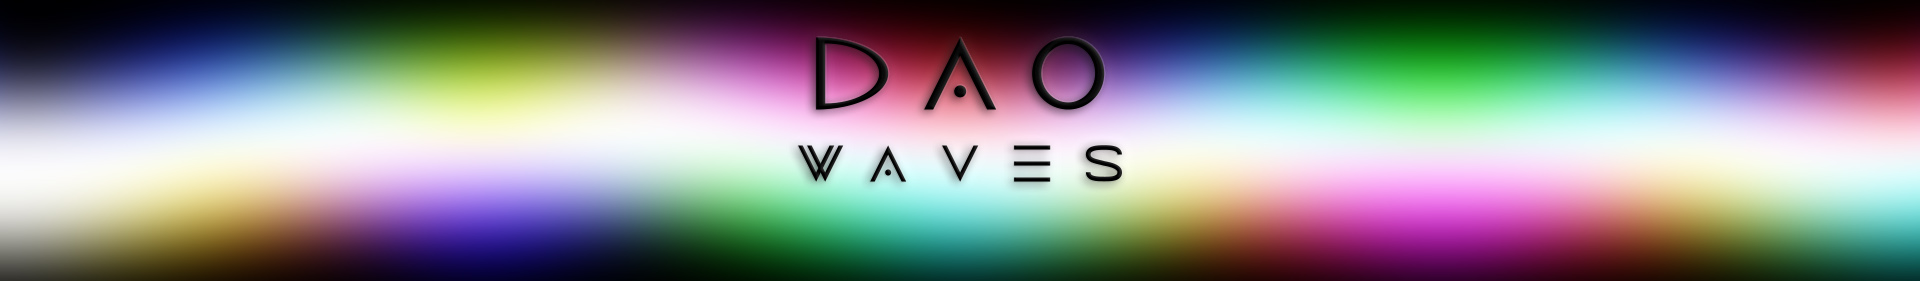 DaoWaves banner